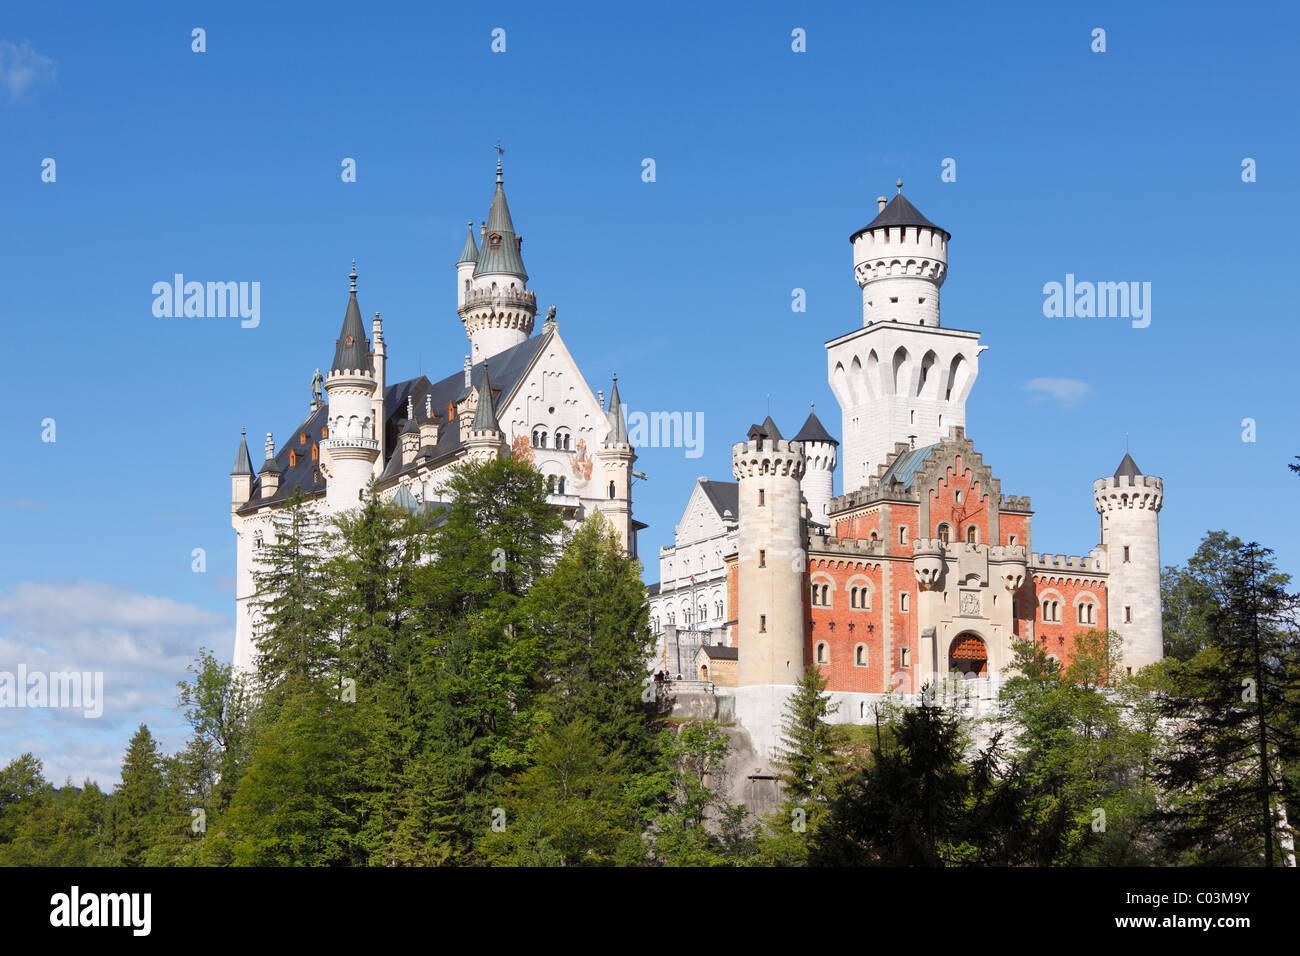 View from the east, Schloss Neuschwanstein Castle, Ostallgaeu, Allgaeu, Schwaben, Bavaria, Germany, Europe Stock Photo